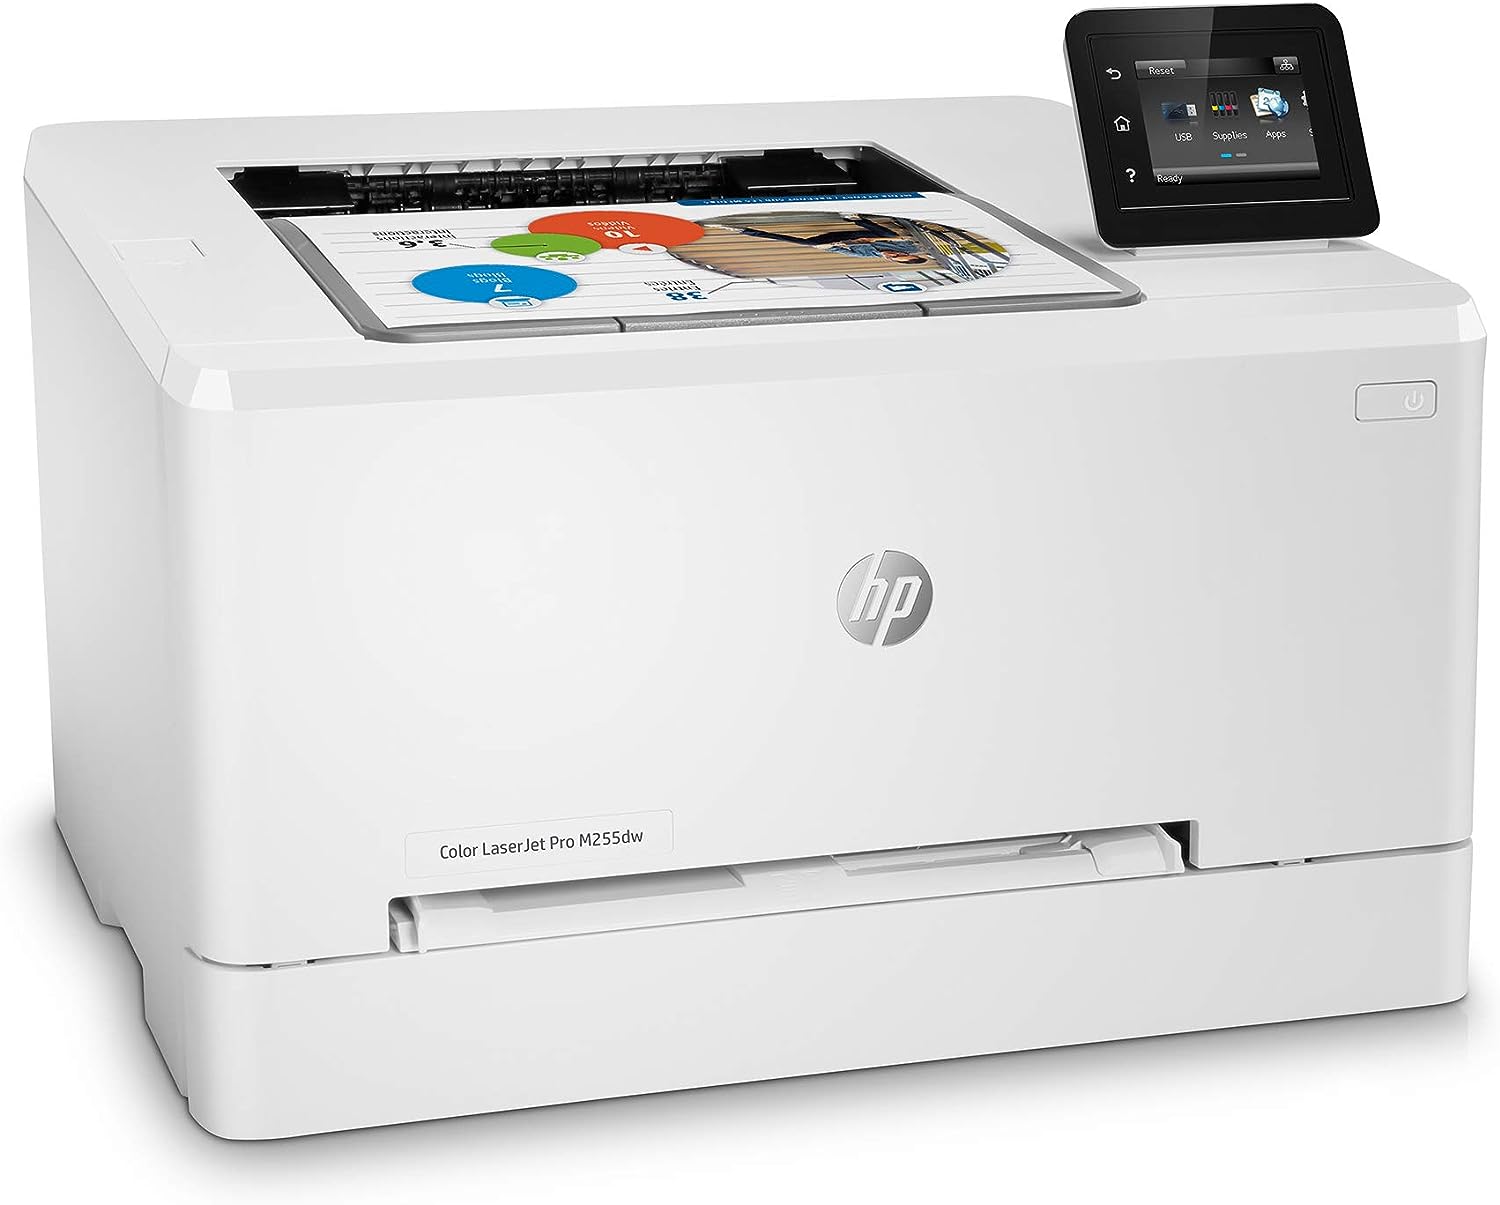 Best HP Color LaserJet Pro M255dw Printer